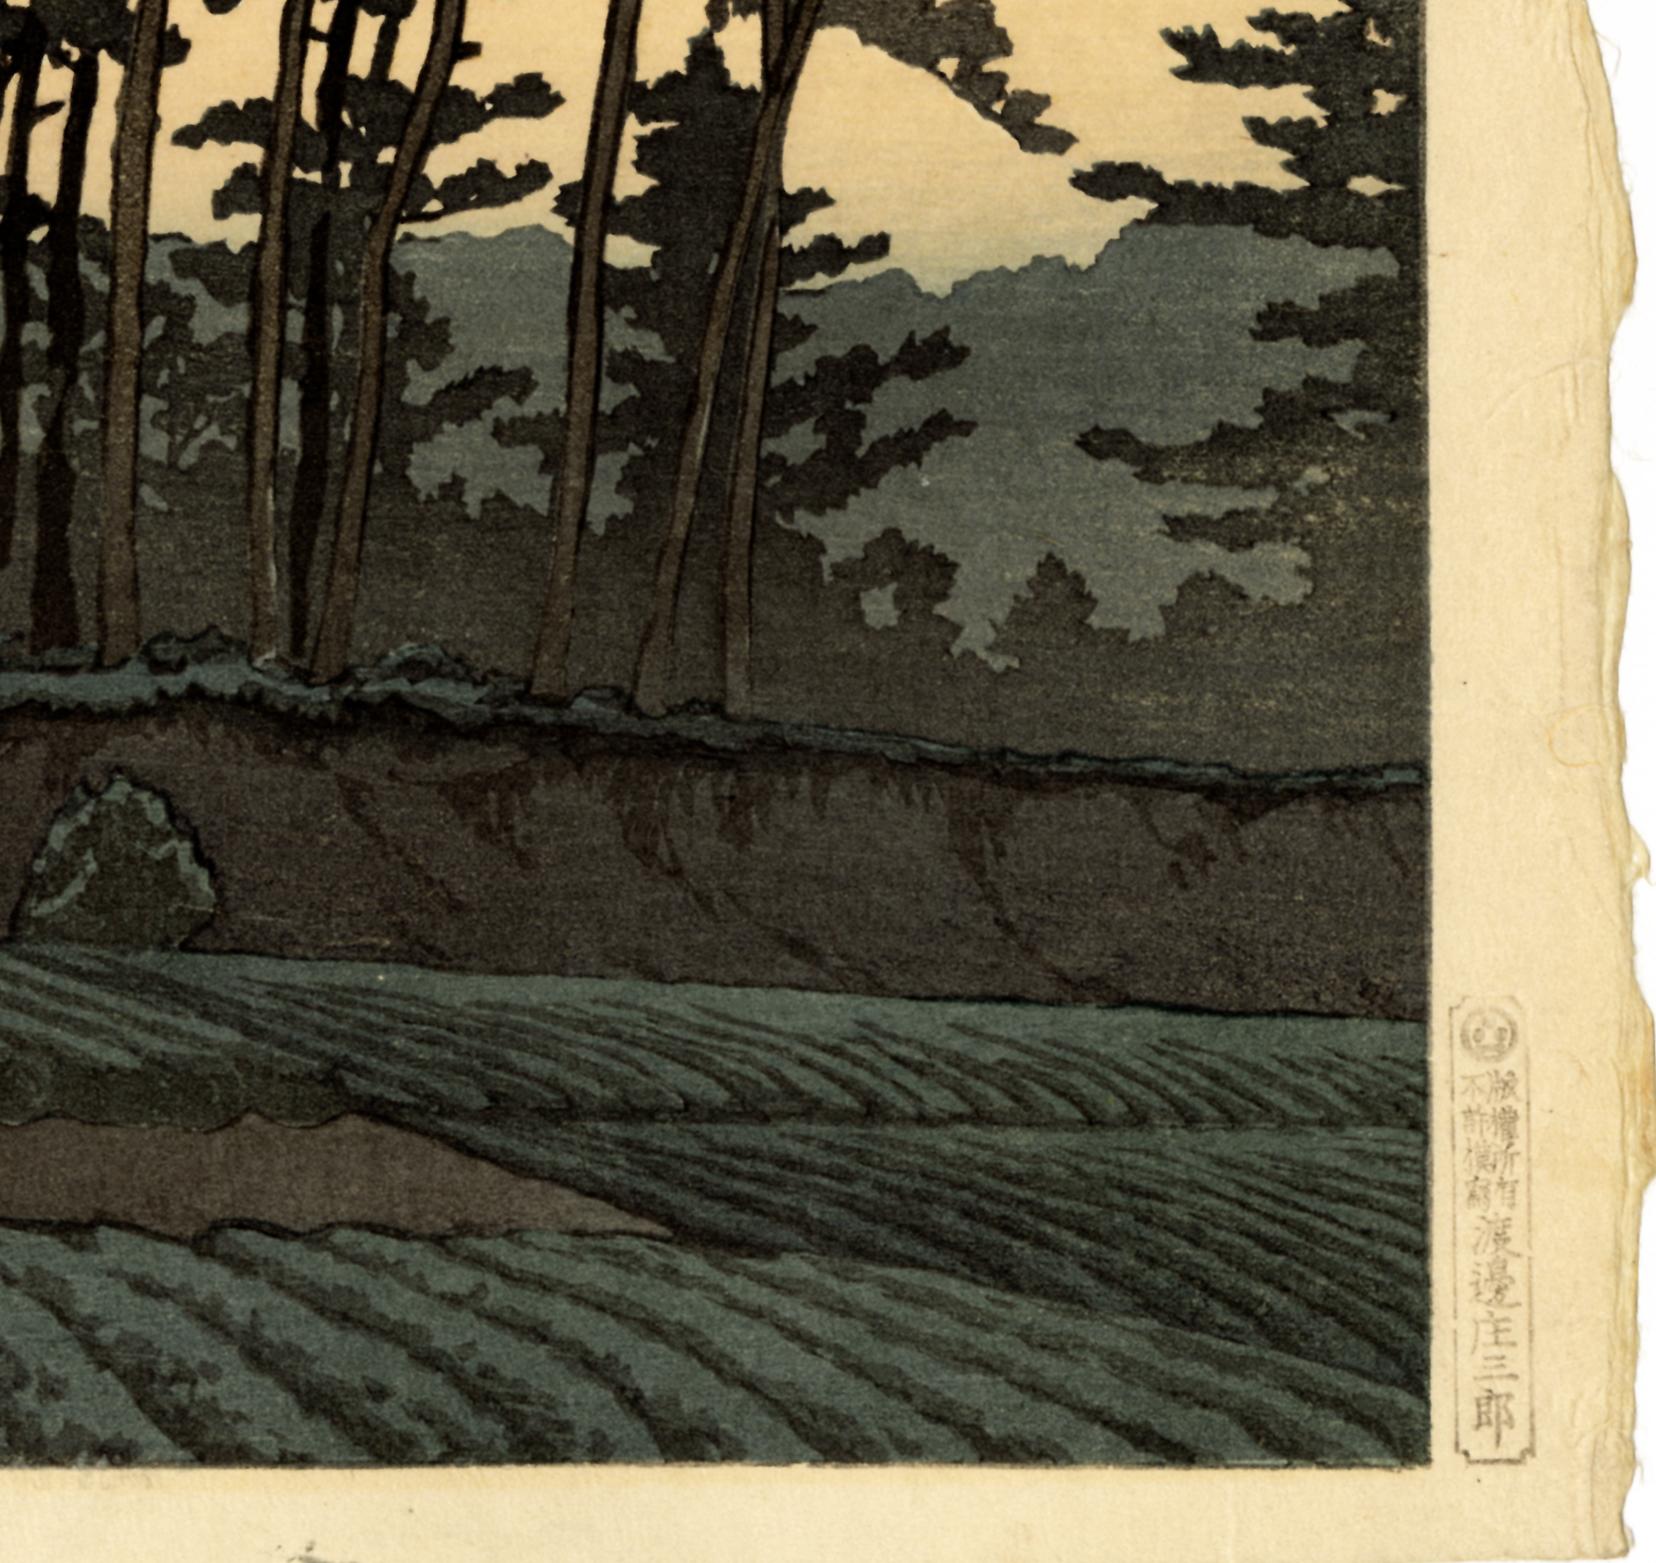 Sunset at Ichinokura, Ikegami, alternate color version - Black Landscape Print by Kawase Hasui